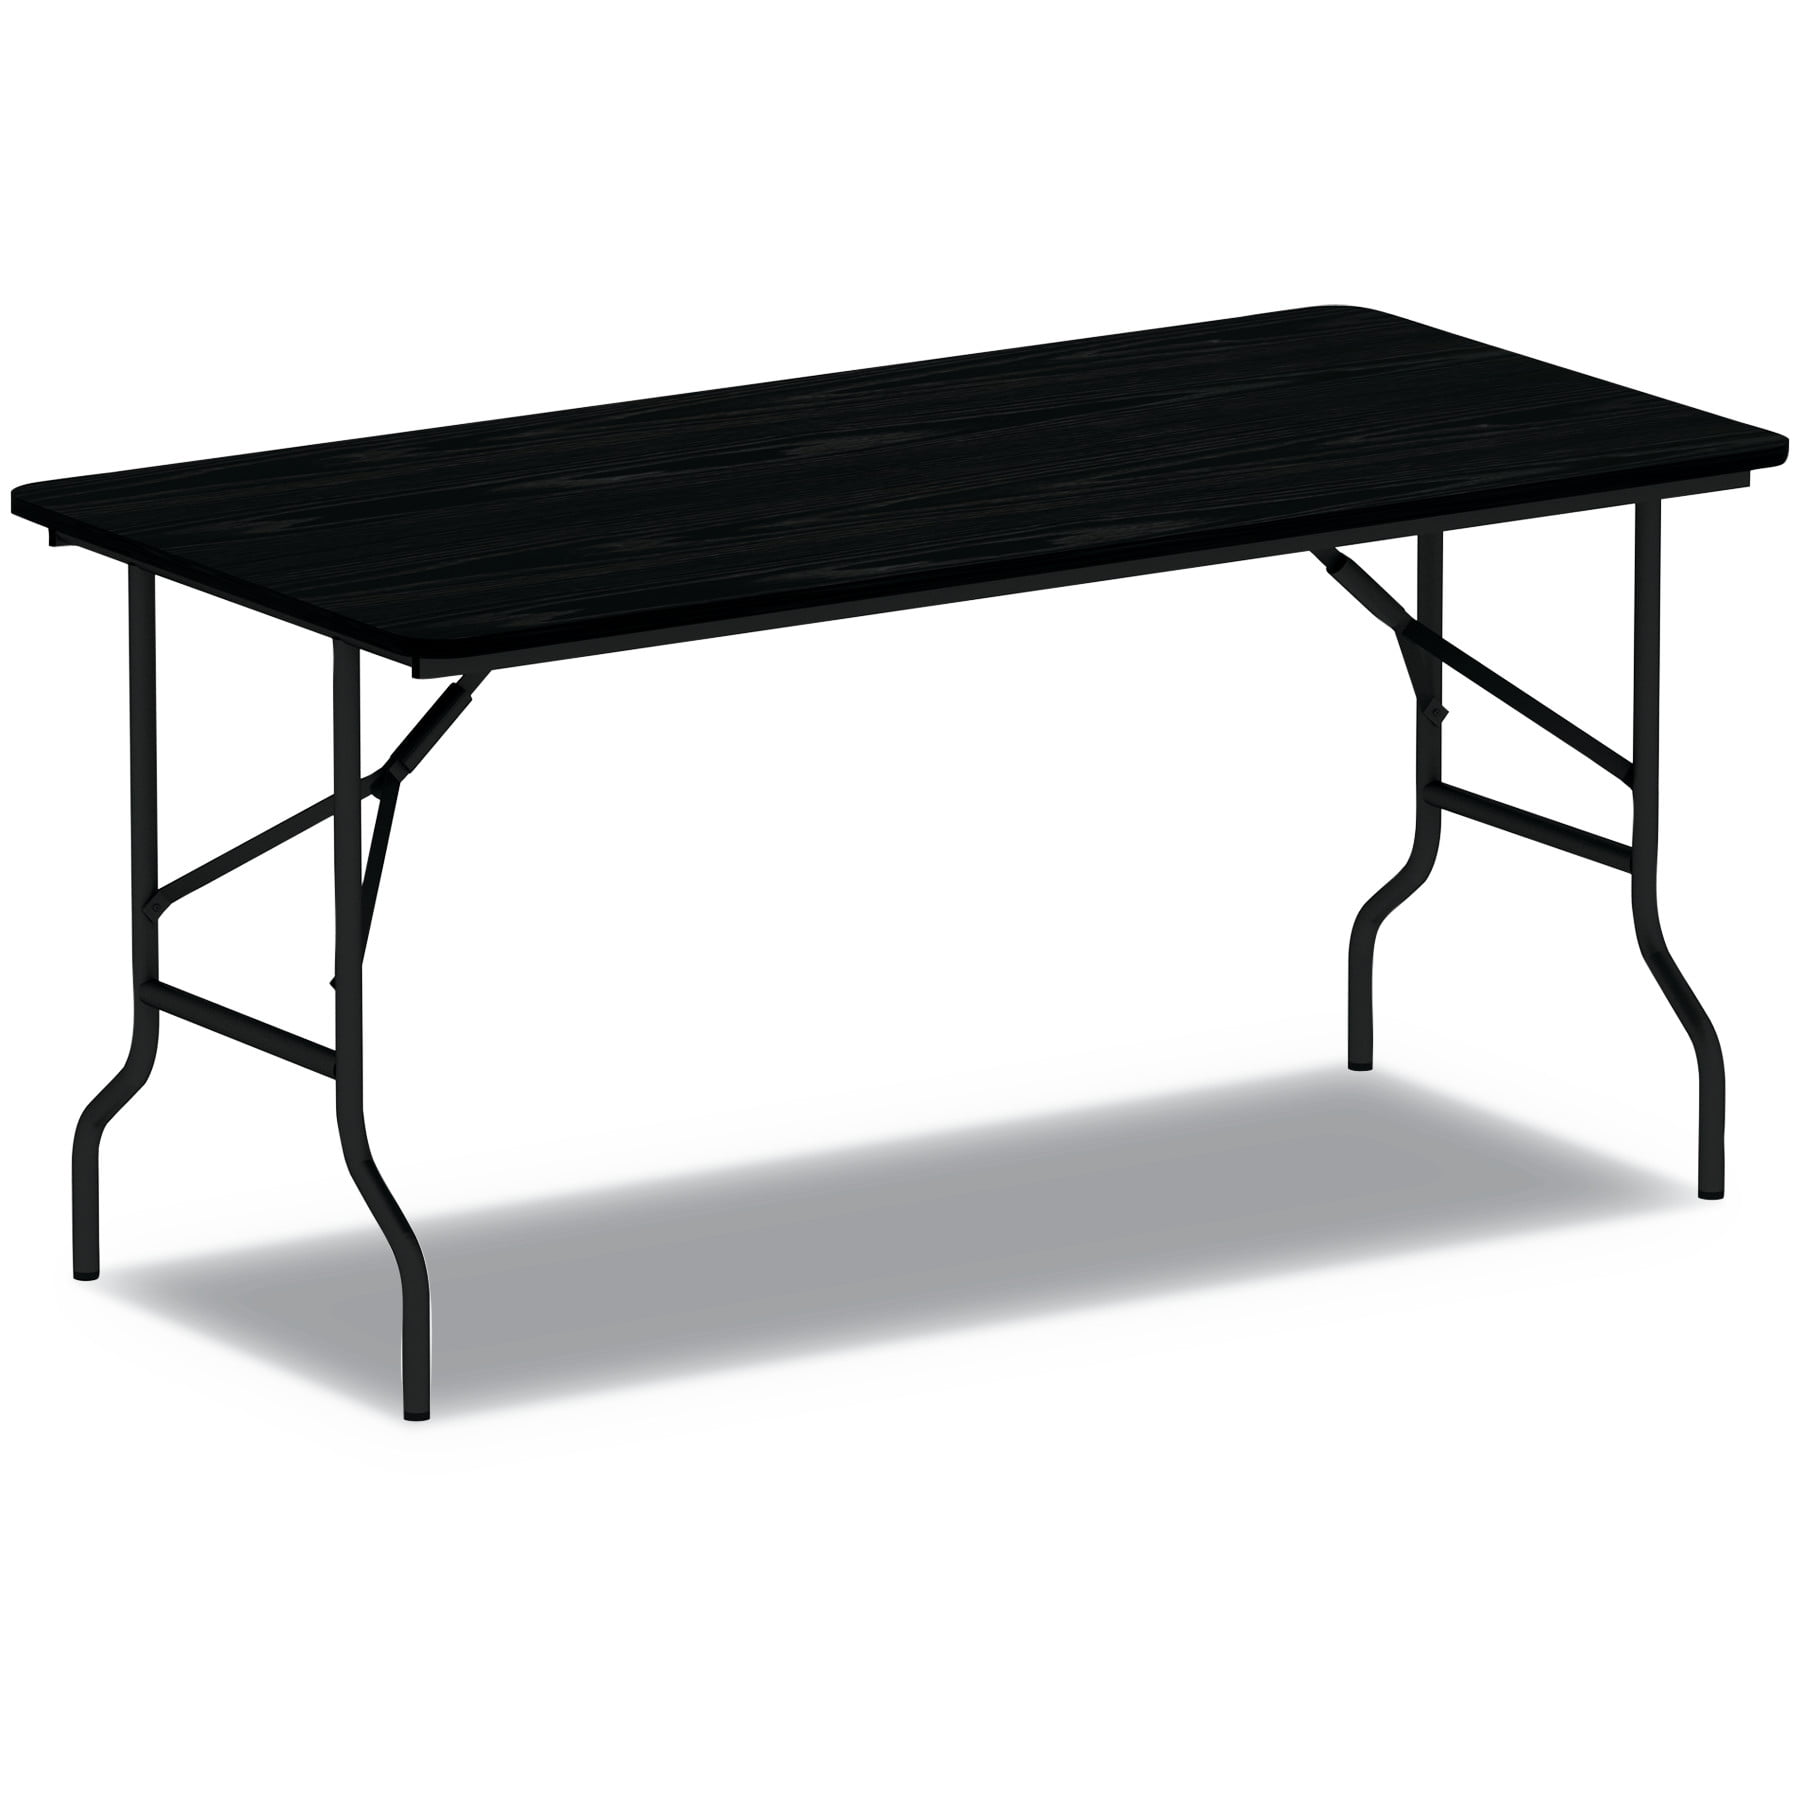 Black wood folding table